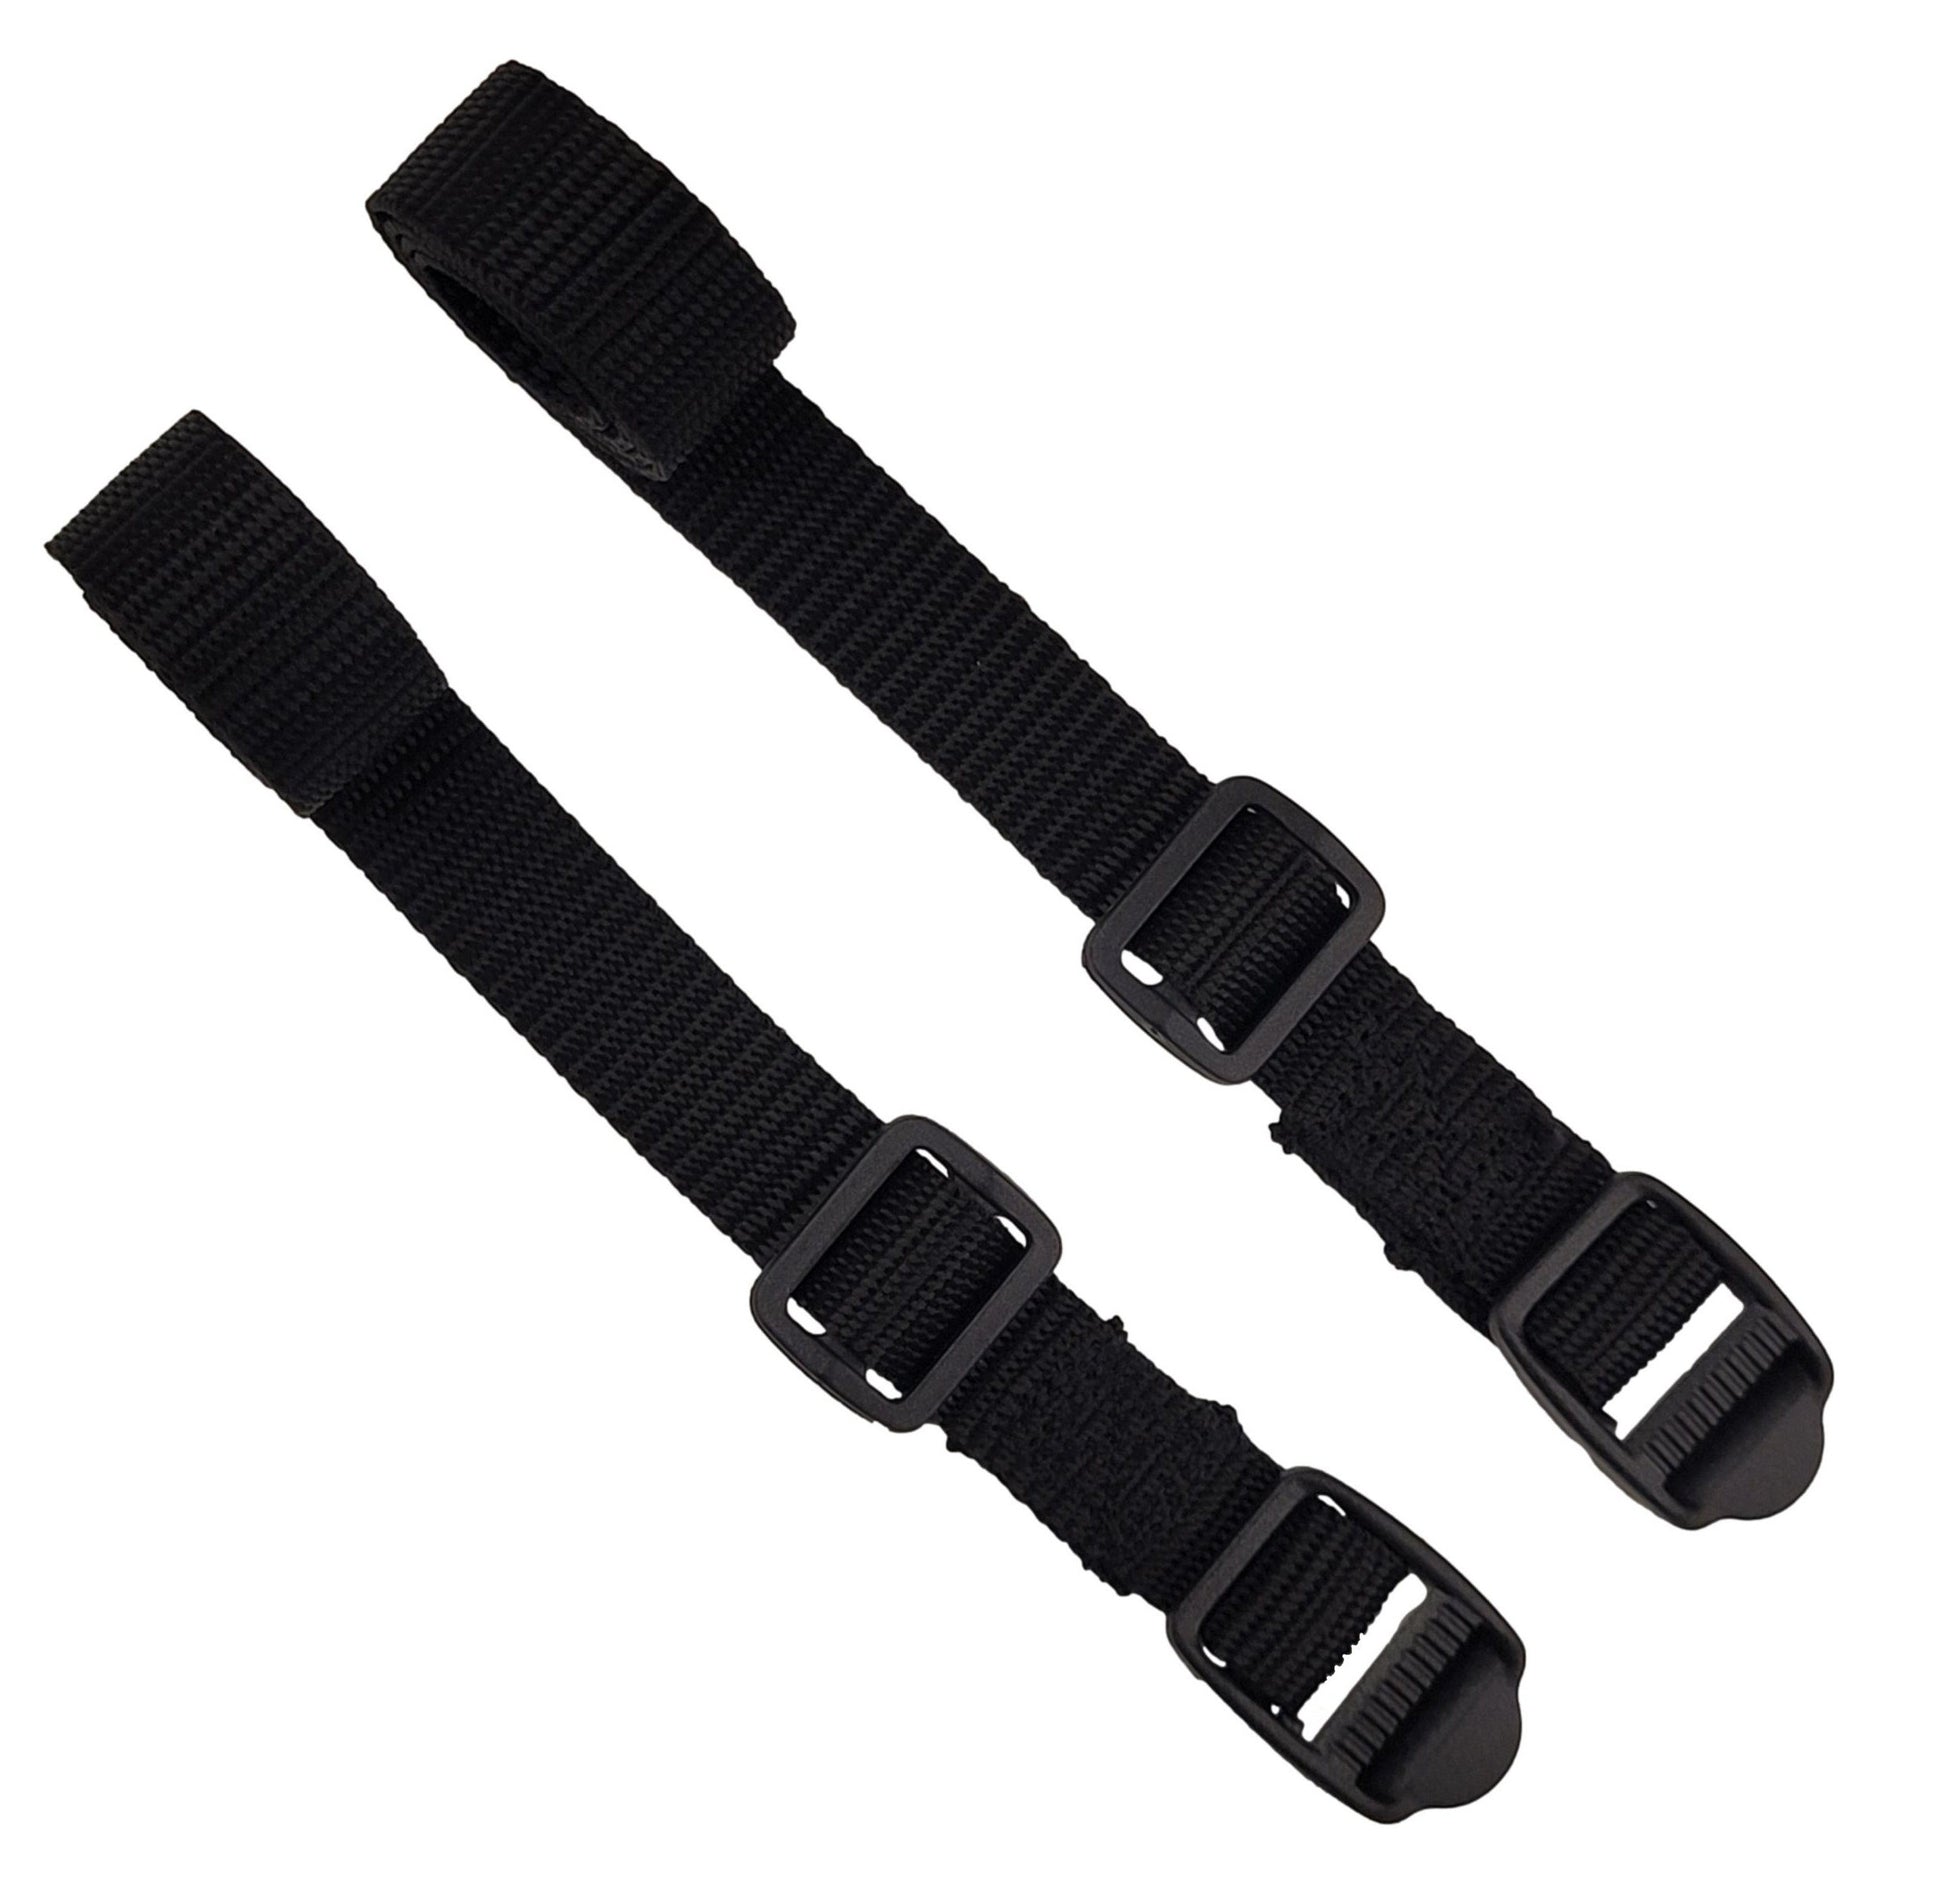 19mm webbing strap in black with ladderlock buckle (pair) (3)